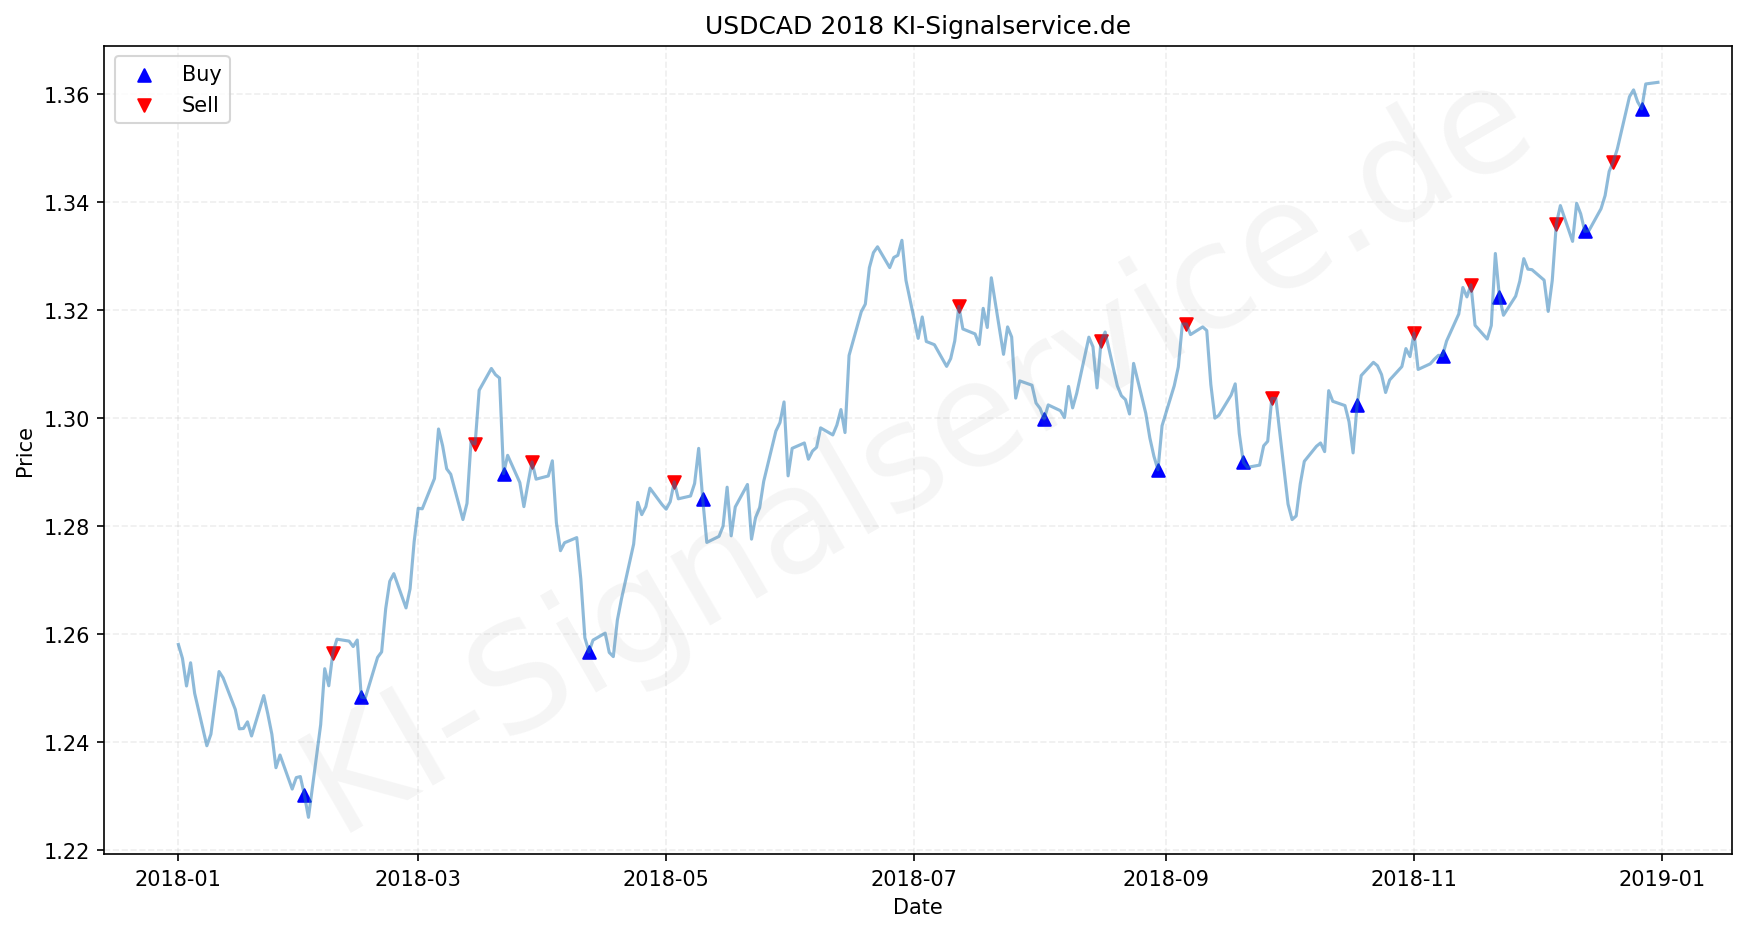 USDCAD Chart - KI Tradingsignale 2018